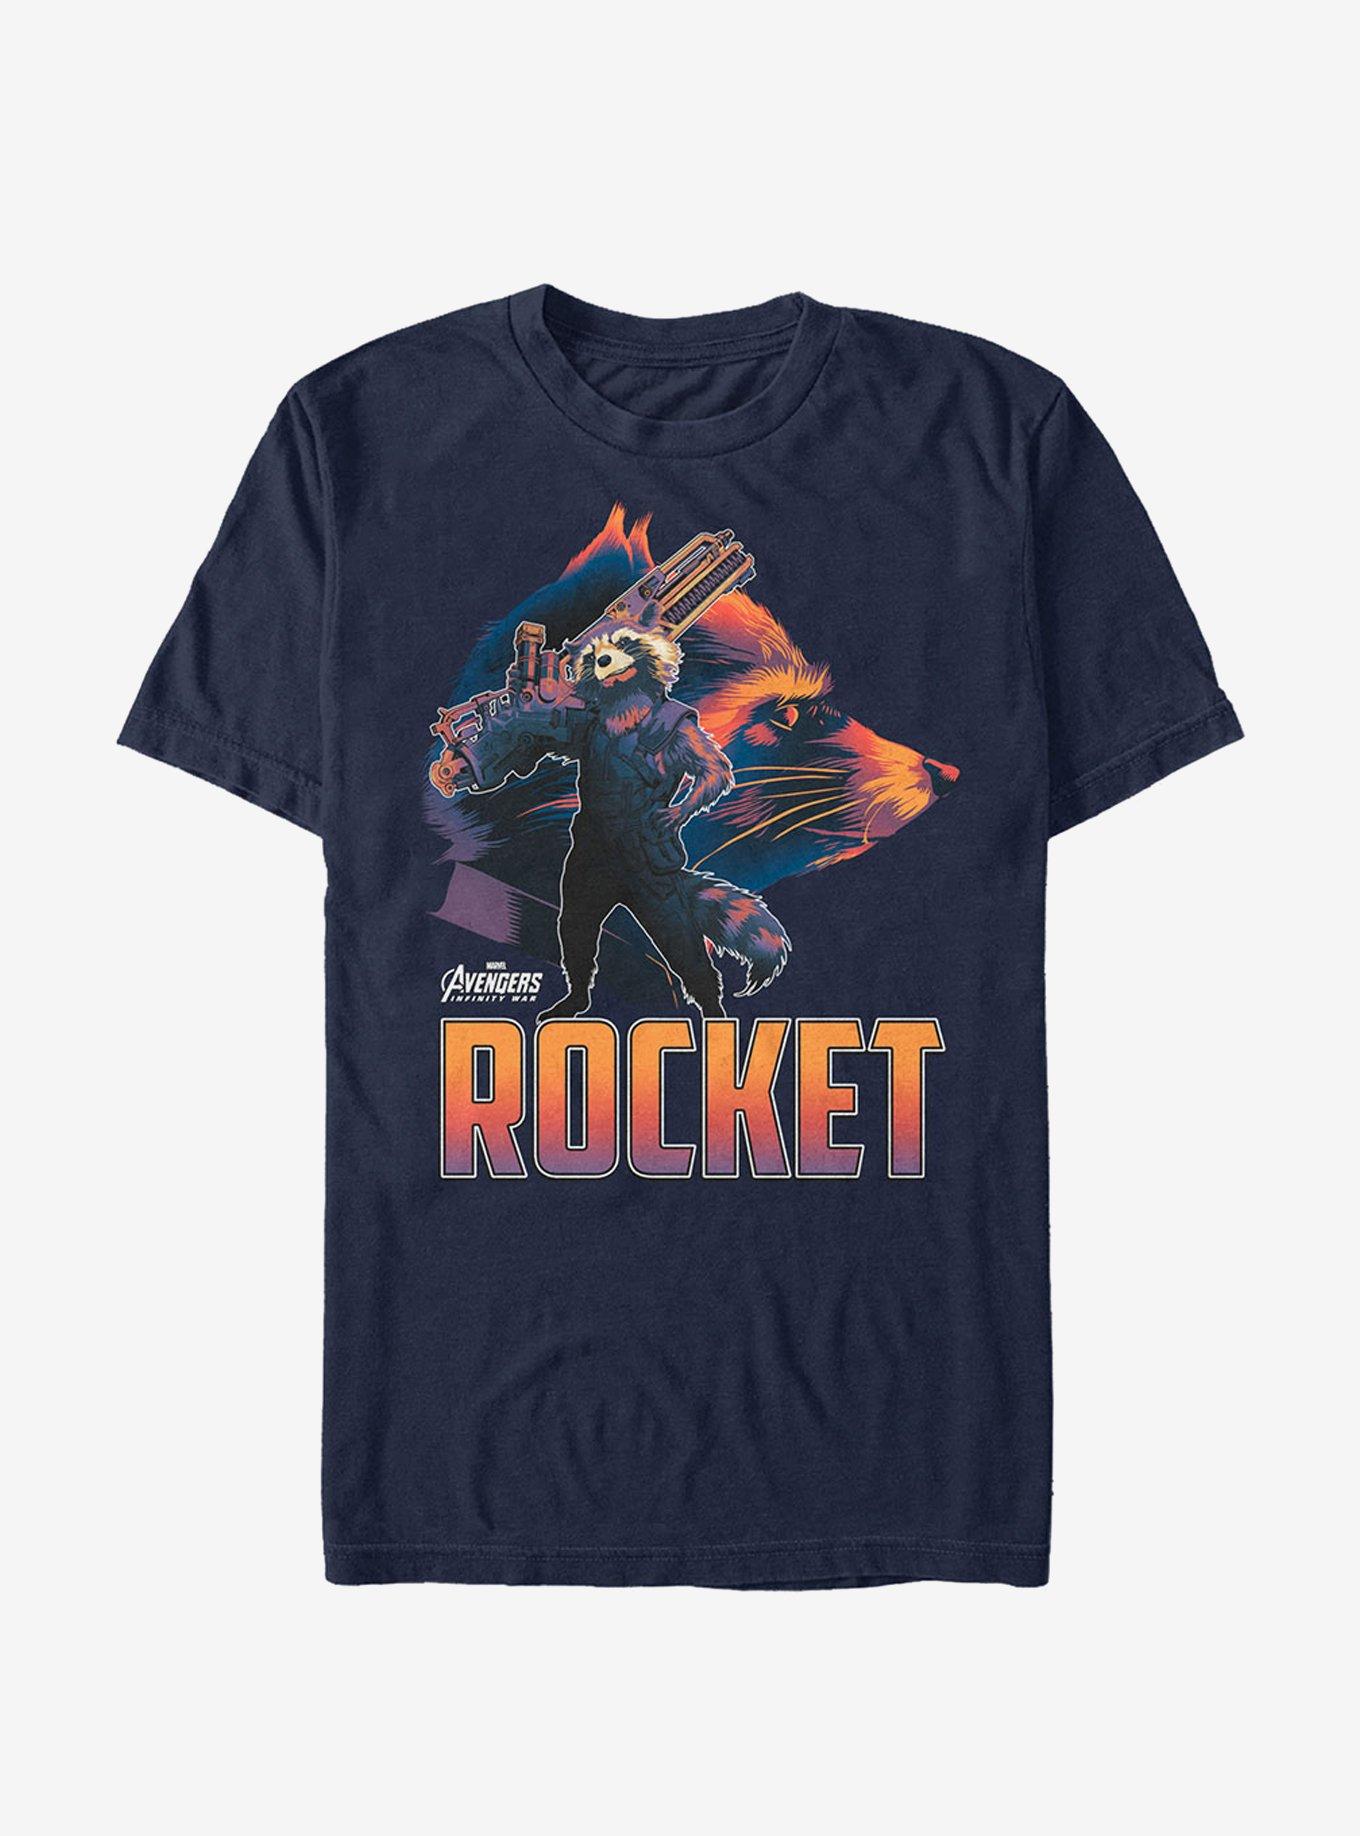 Marvel Avengers: Infinity War Rocket Portrait T-Shirt, NAVY, hi-res